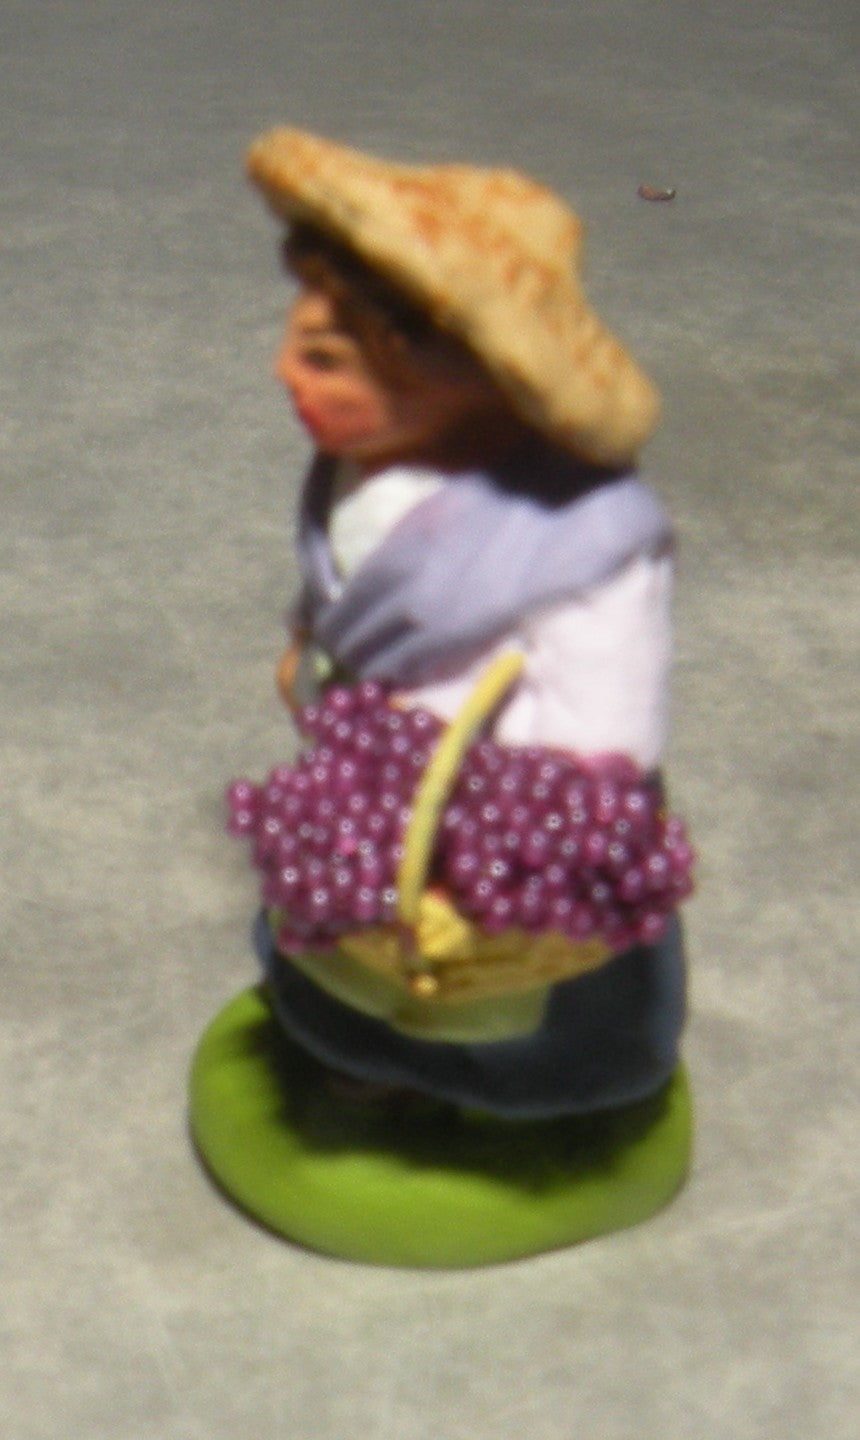 Woman harvesting Grapes , Didier Mini